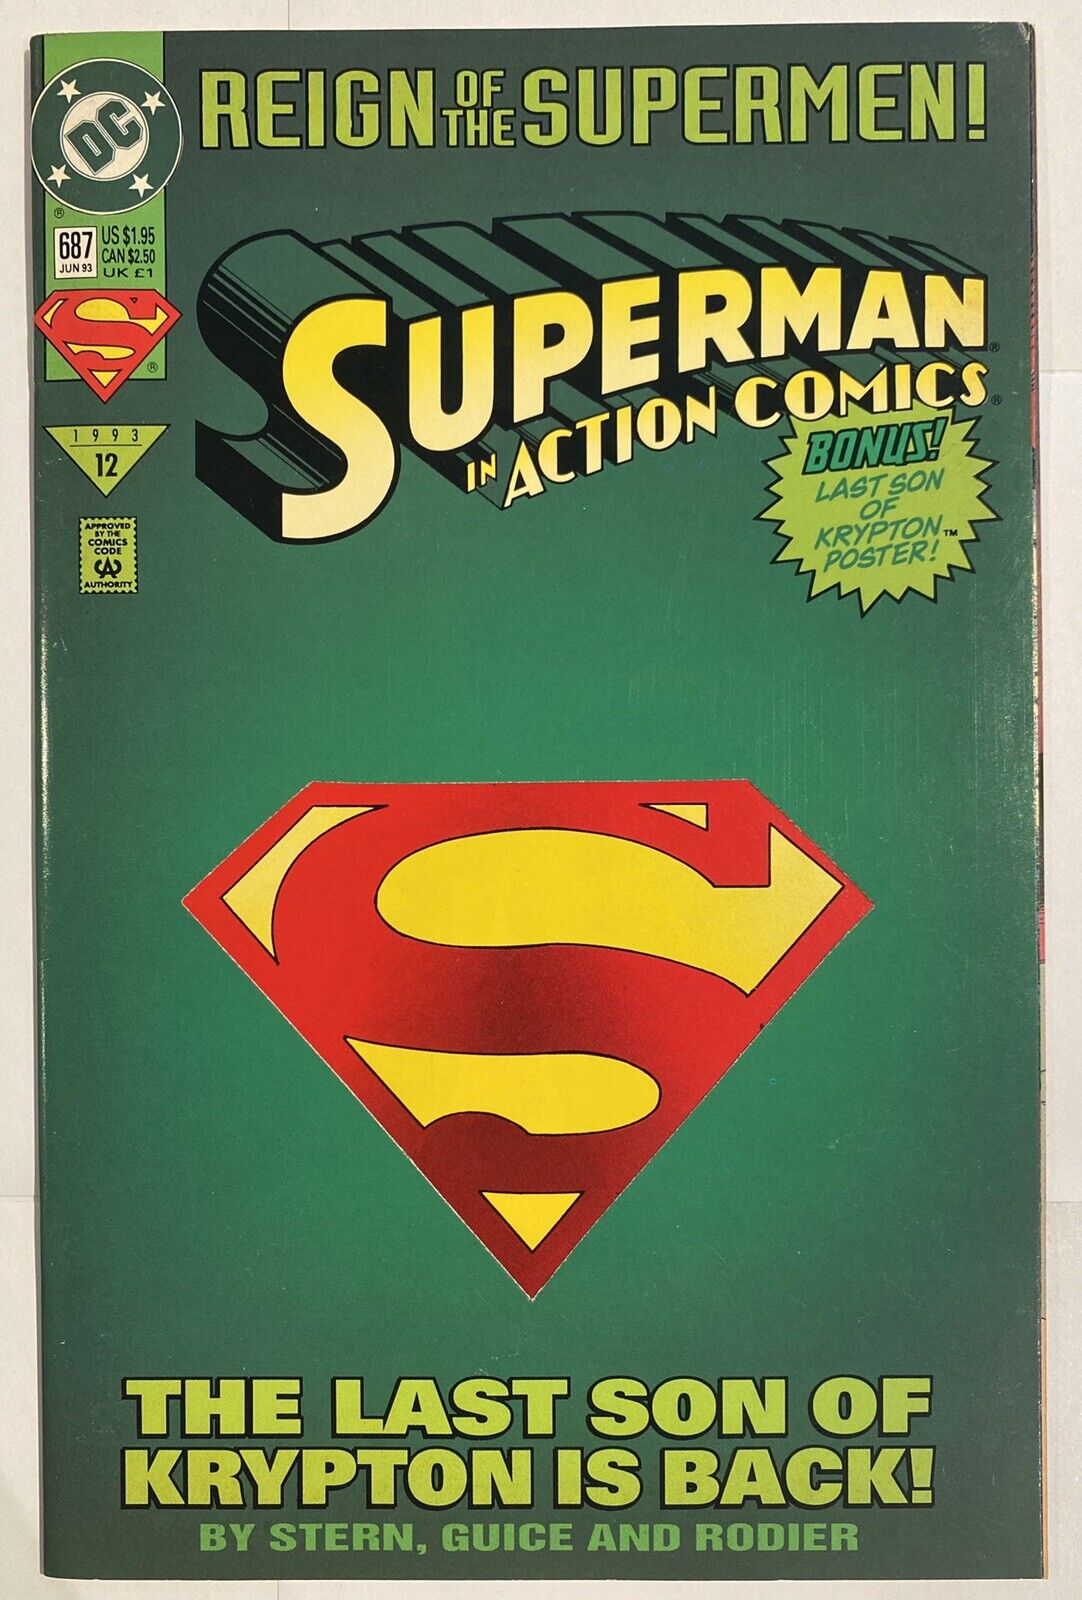 DC SUPERMAN IN ACTION COMICS REIGN OF THE SUPERMEN 1993 #12 #687 JUNE 93